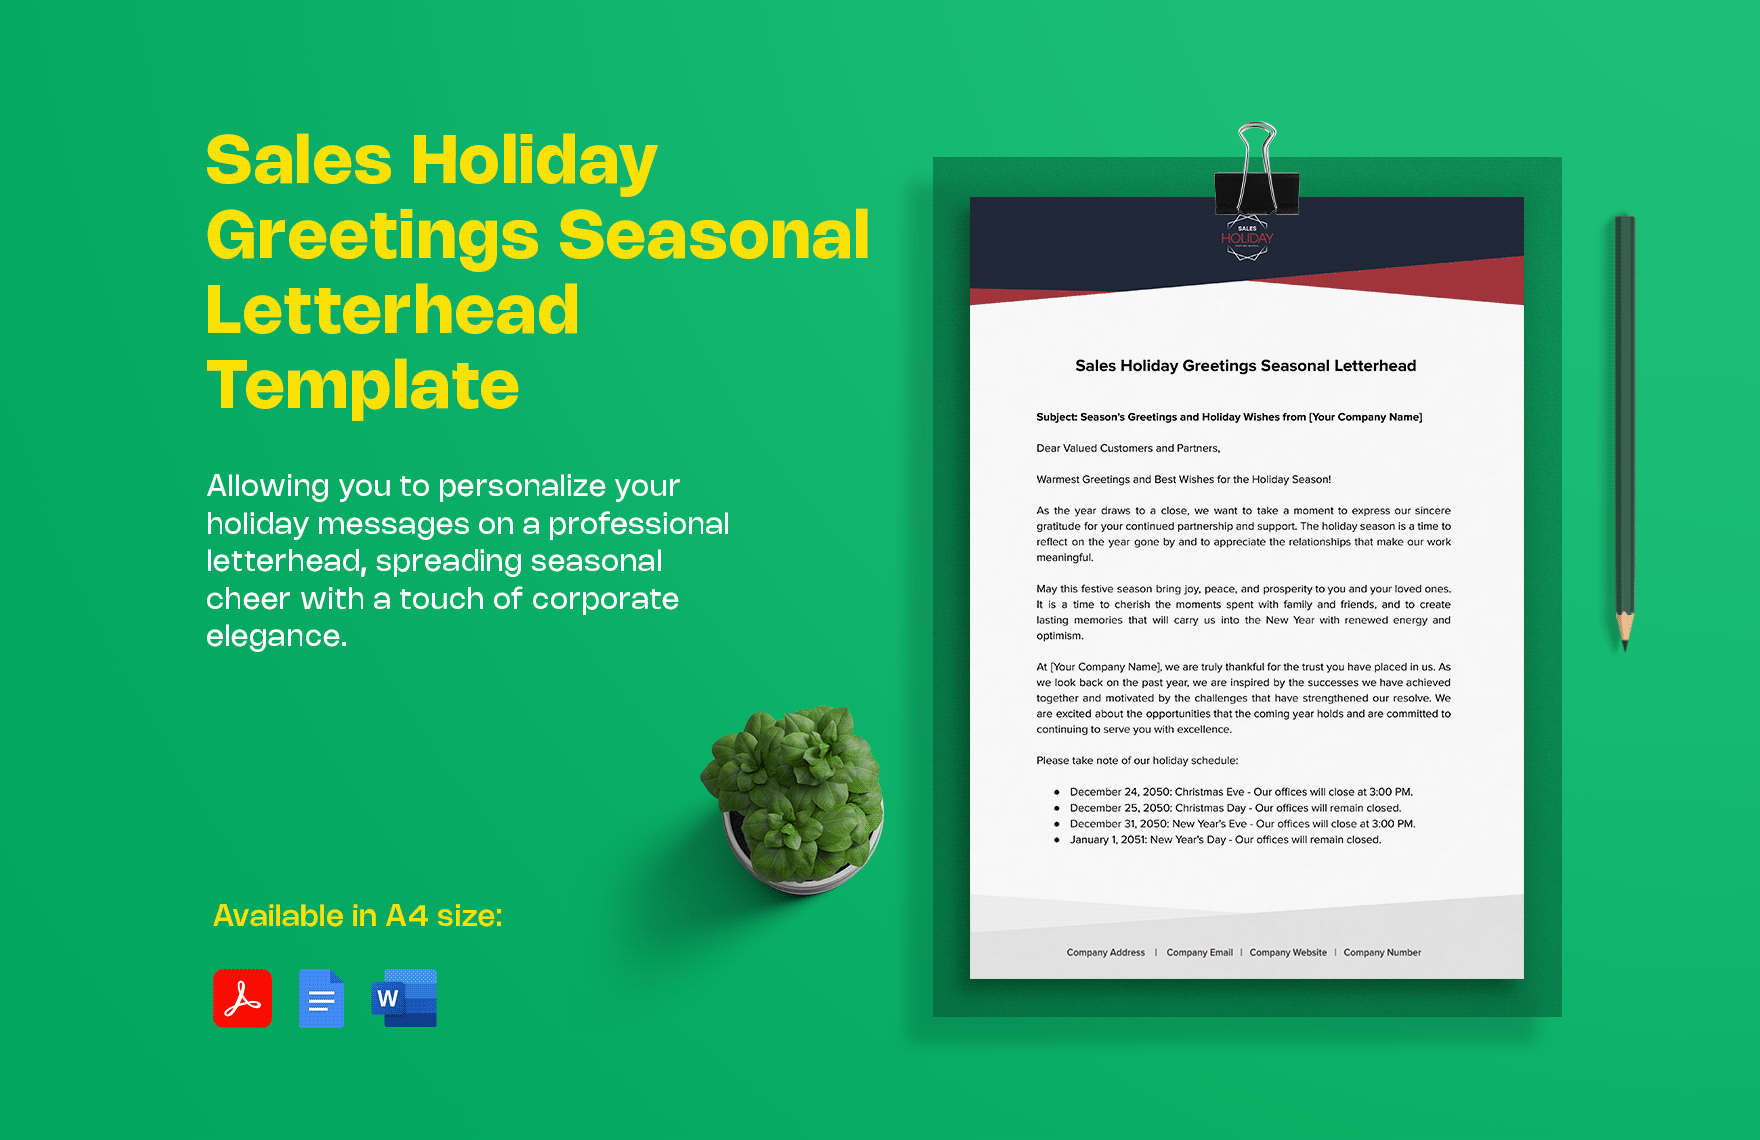 Sales Holiday Greetings Seasonal Letterhead Template